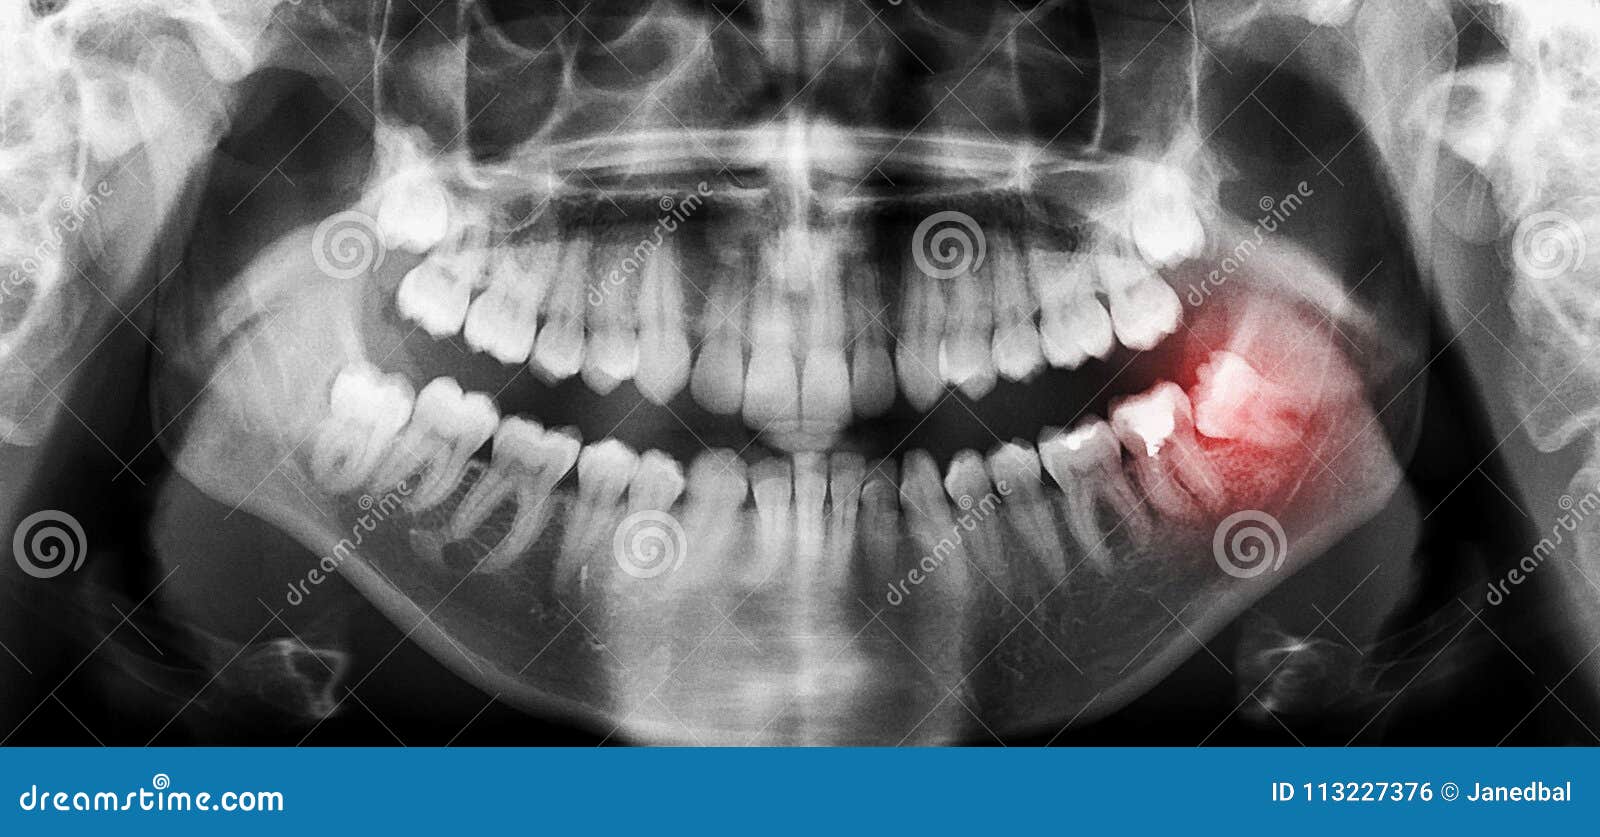 dental teeth x-ray panoramic scan with skewed wisdom tooth